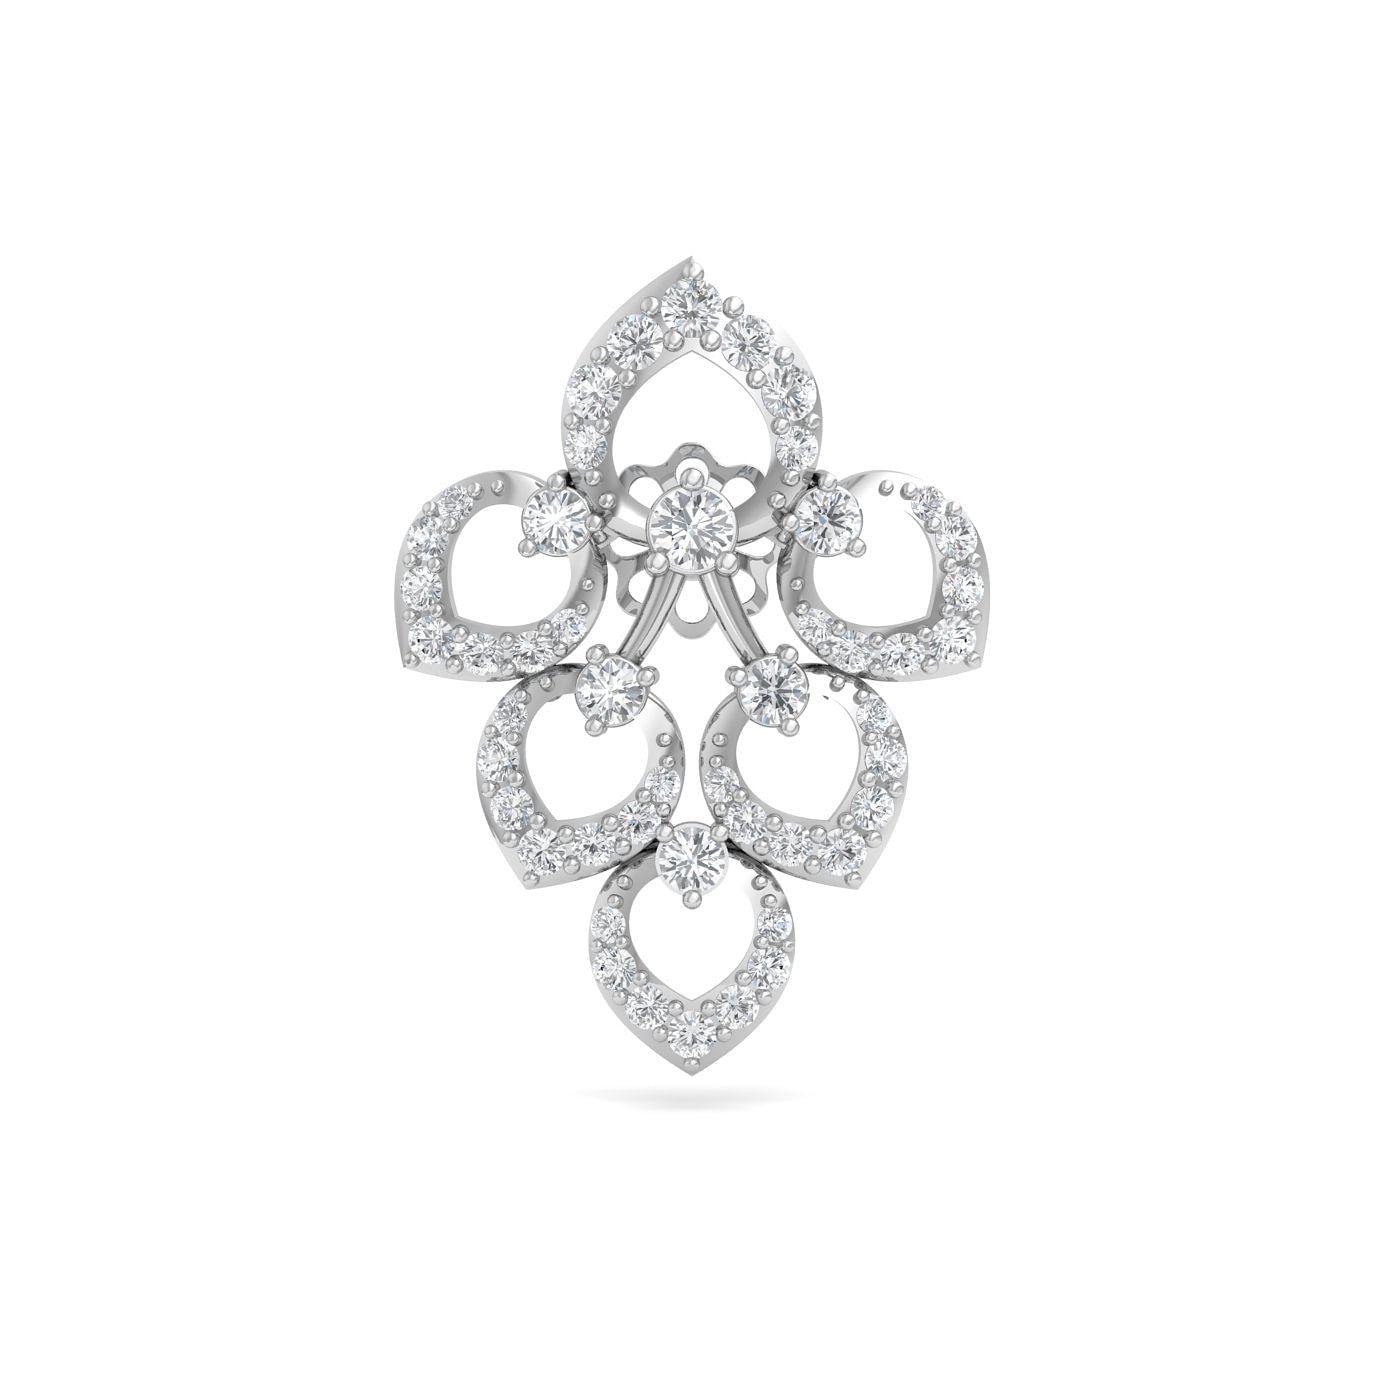 Petals Design Diamond Earring In White Gold